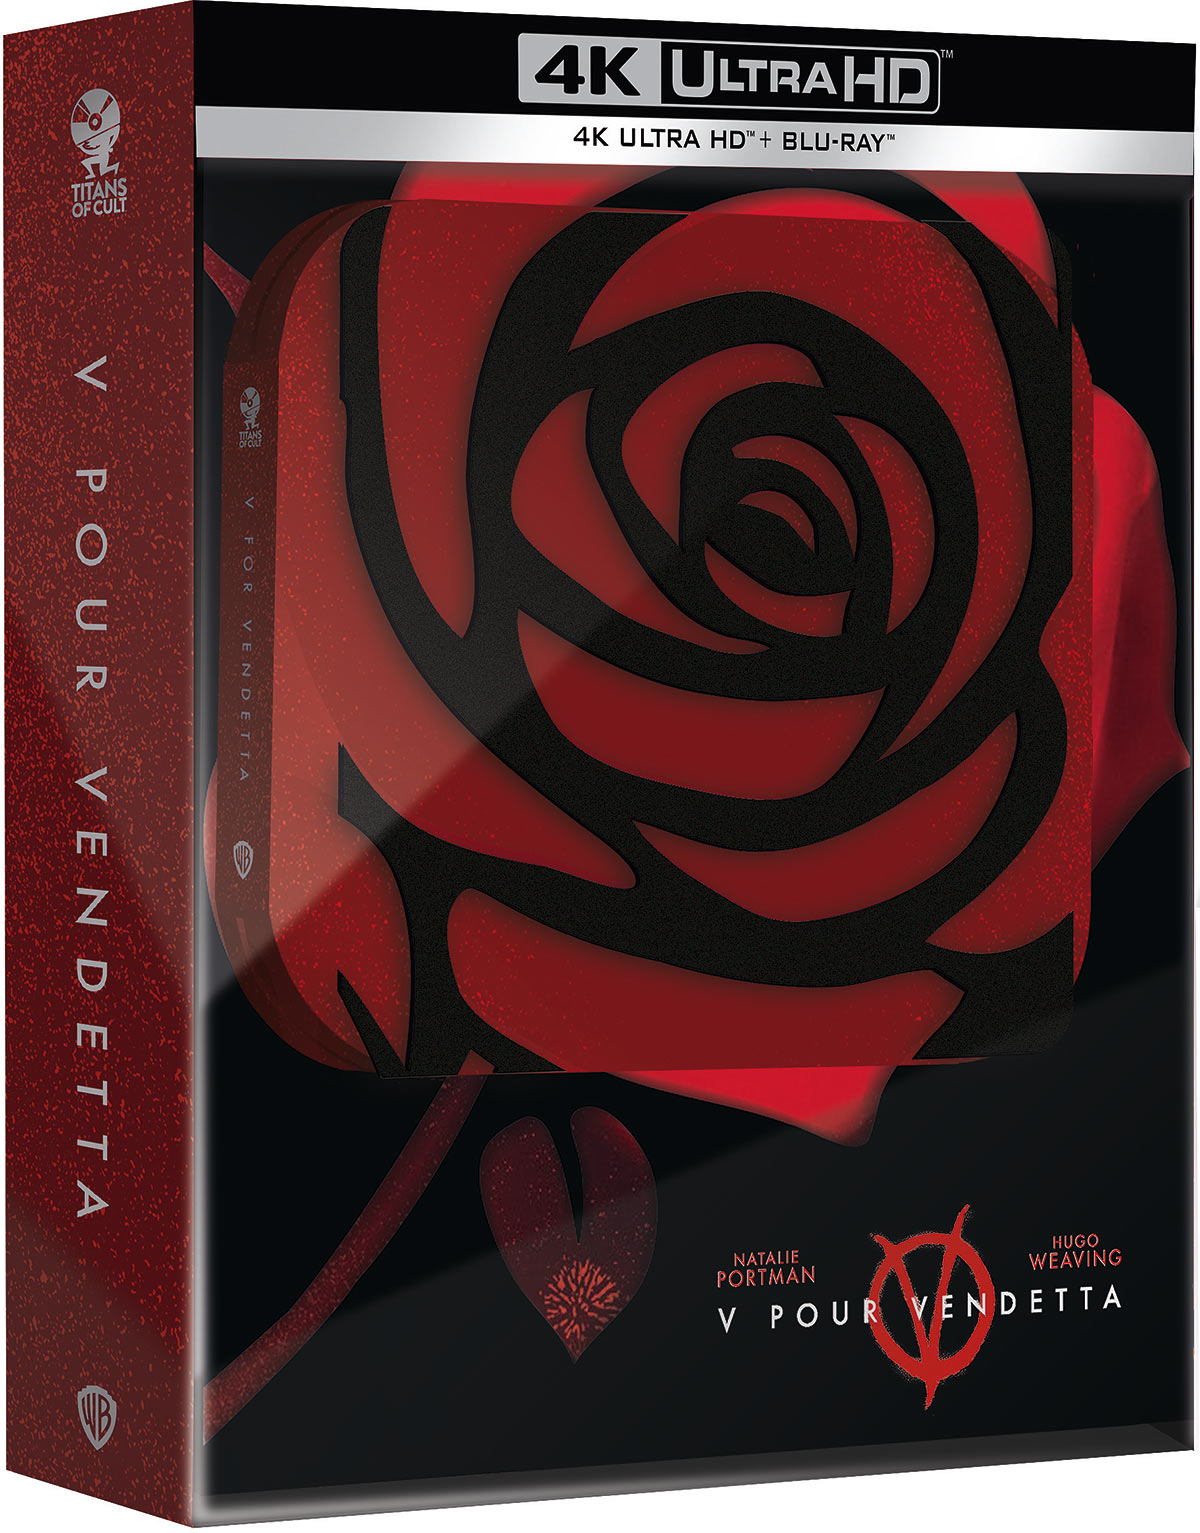 V pour Vendetta - Titans of Cult SteelBook 4K Ultra HD + Blu-ray + Goodies